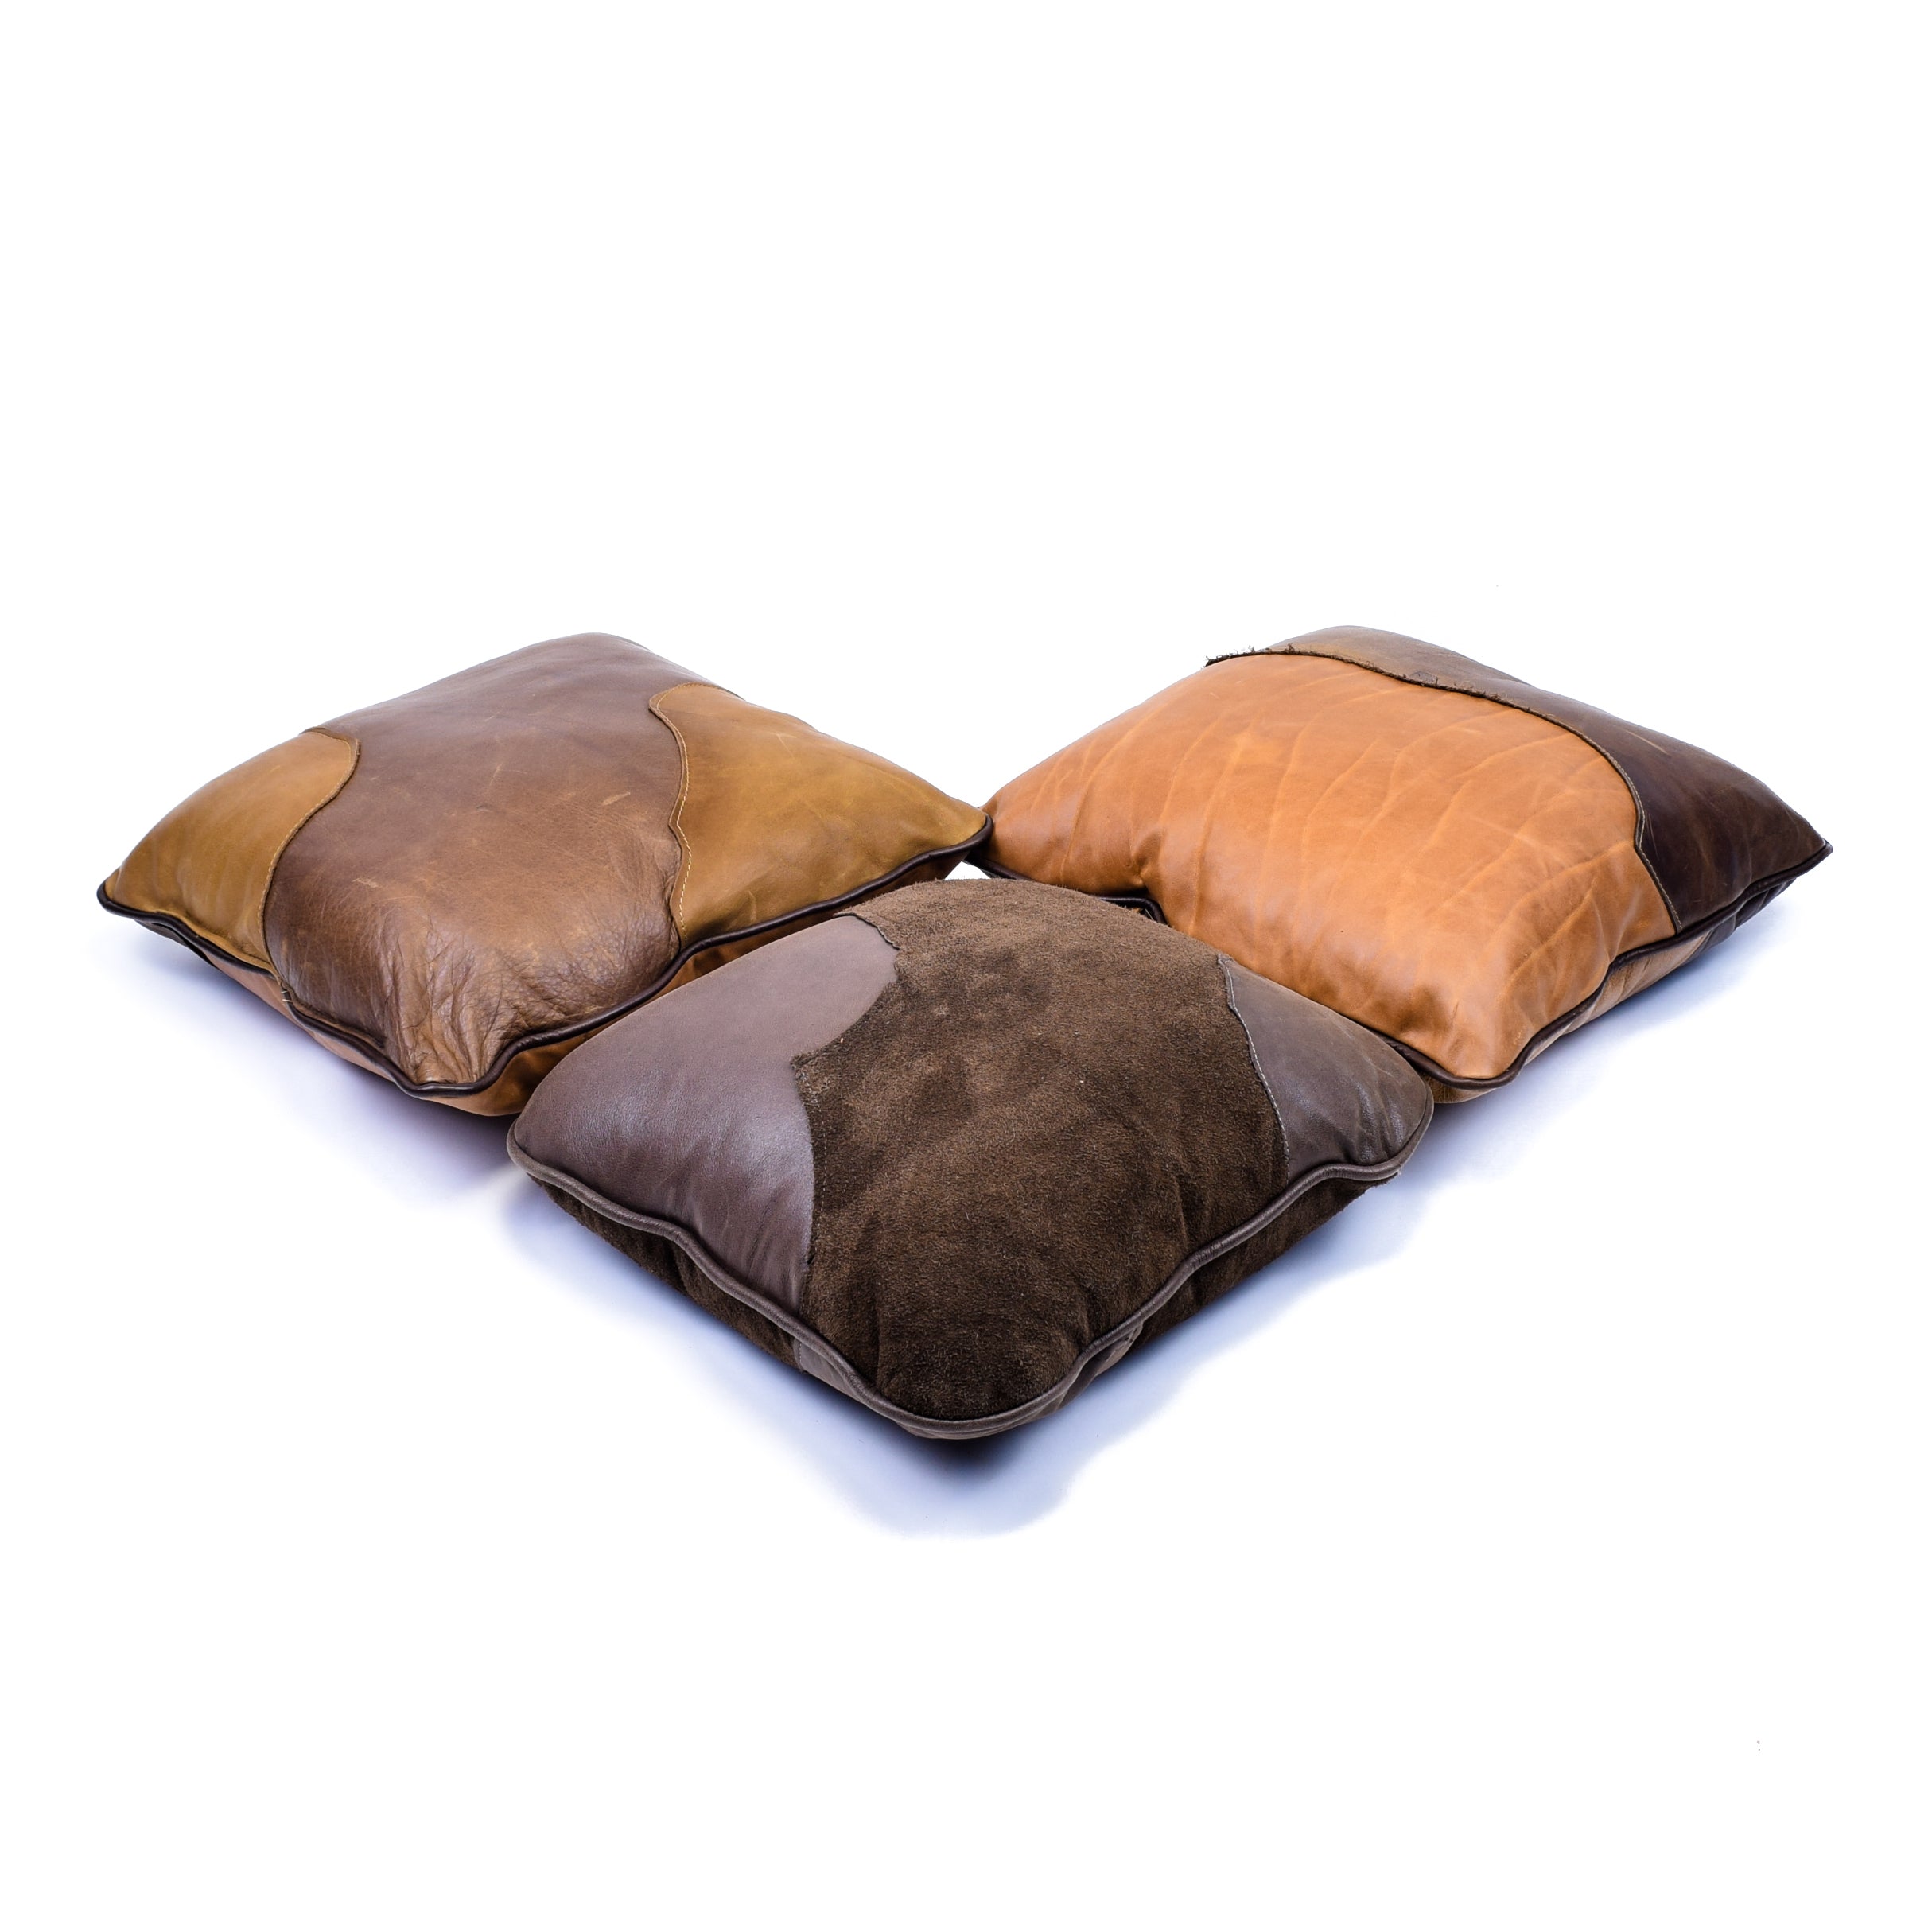 Cisco's Ranch Pillows, Furnishings, Decor, Pillow